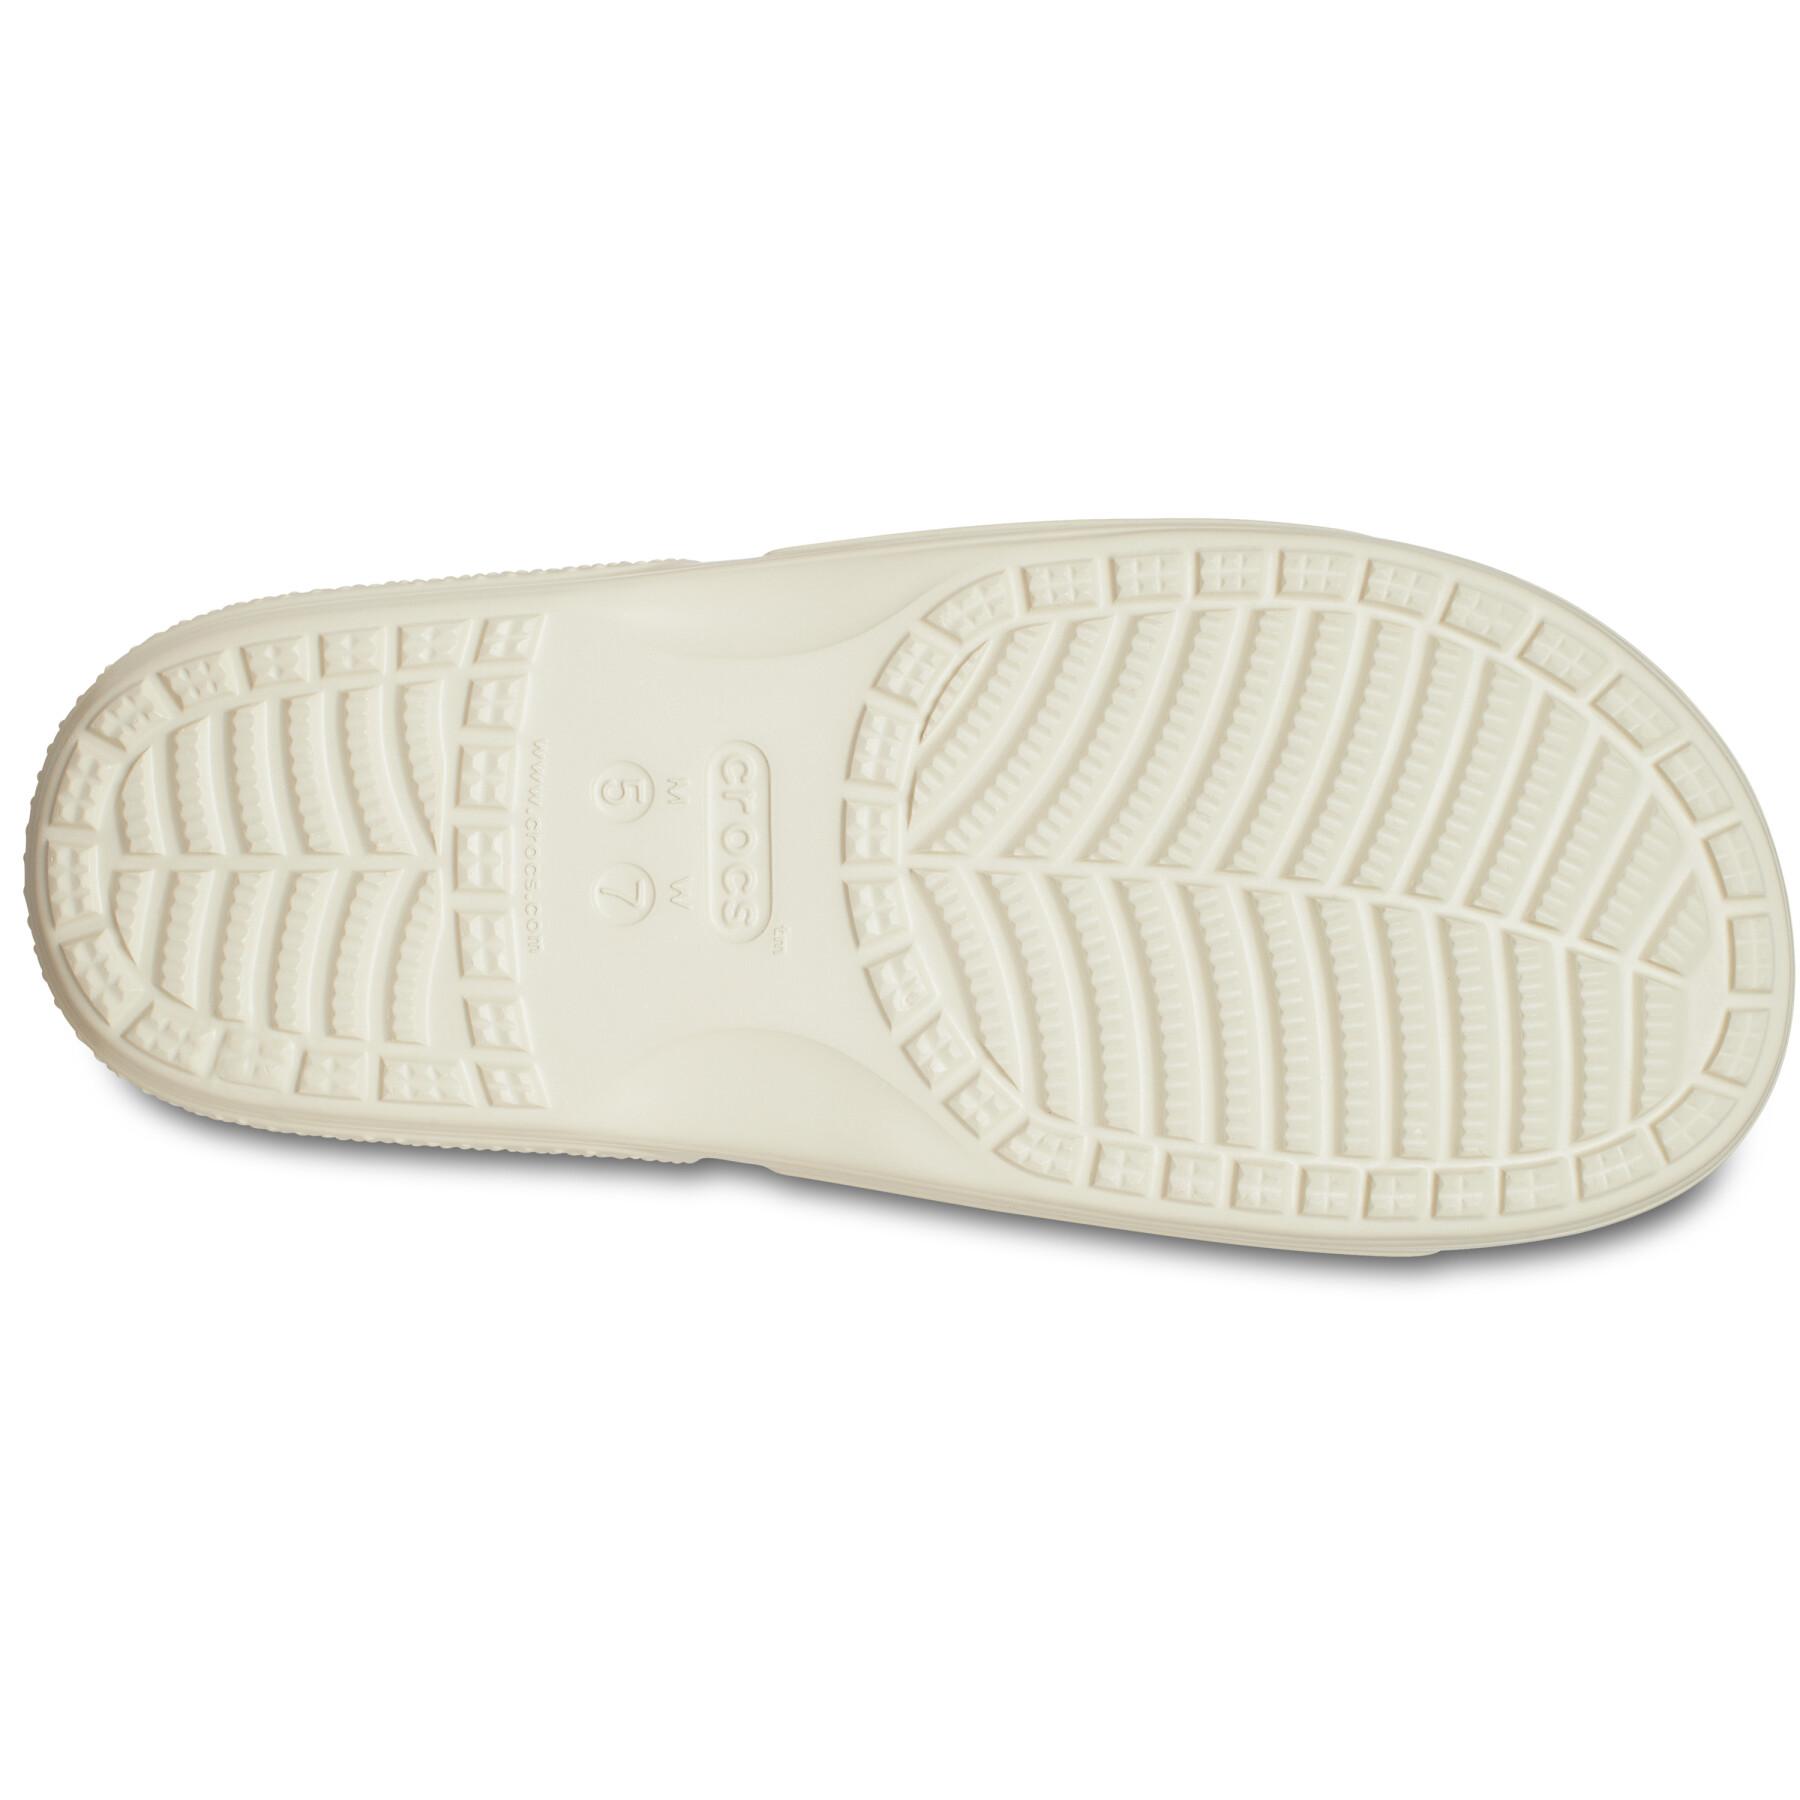 Tap shoes Crocs Classic Slide